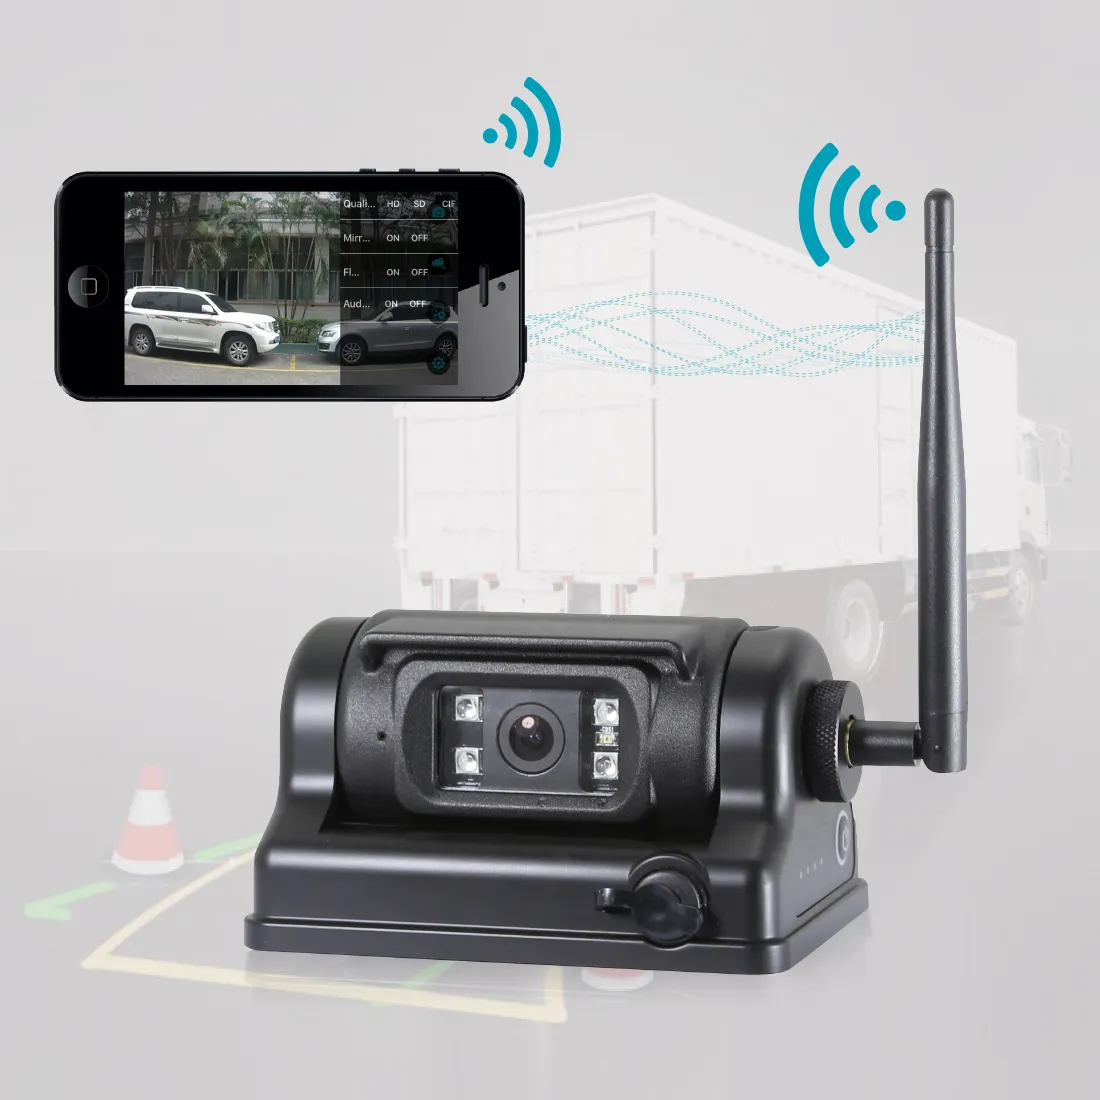 STONKAM wifi wireless rechargeable backup camera for semi truck caravan waterproof for outdoor use